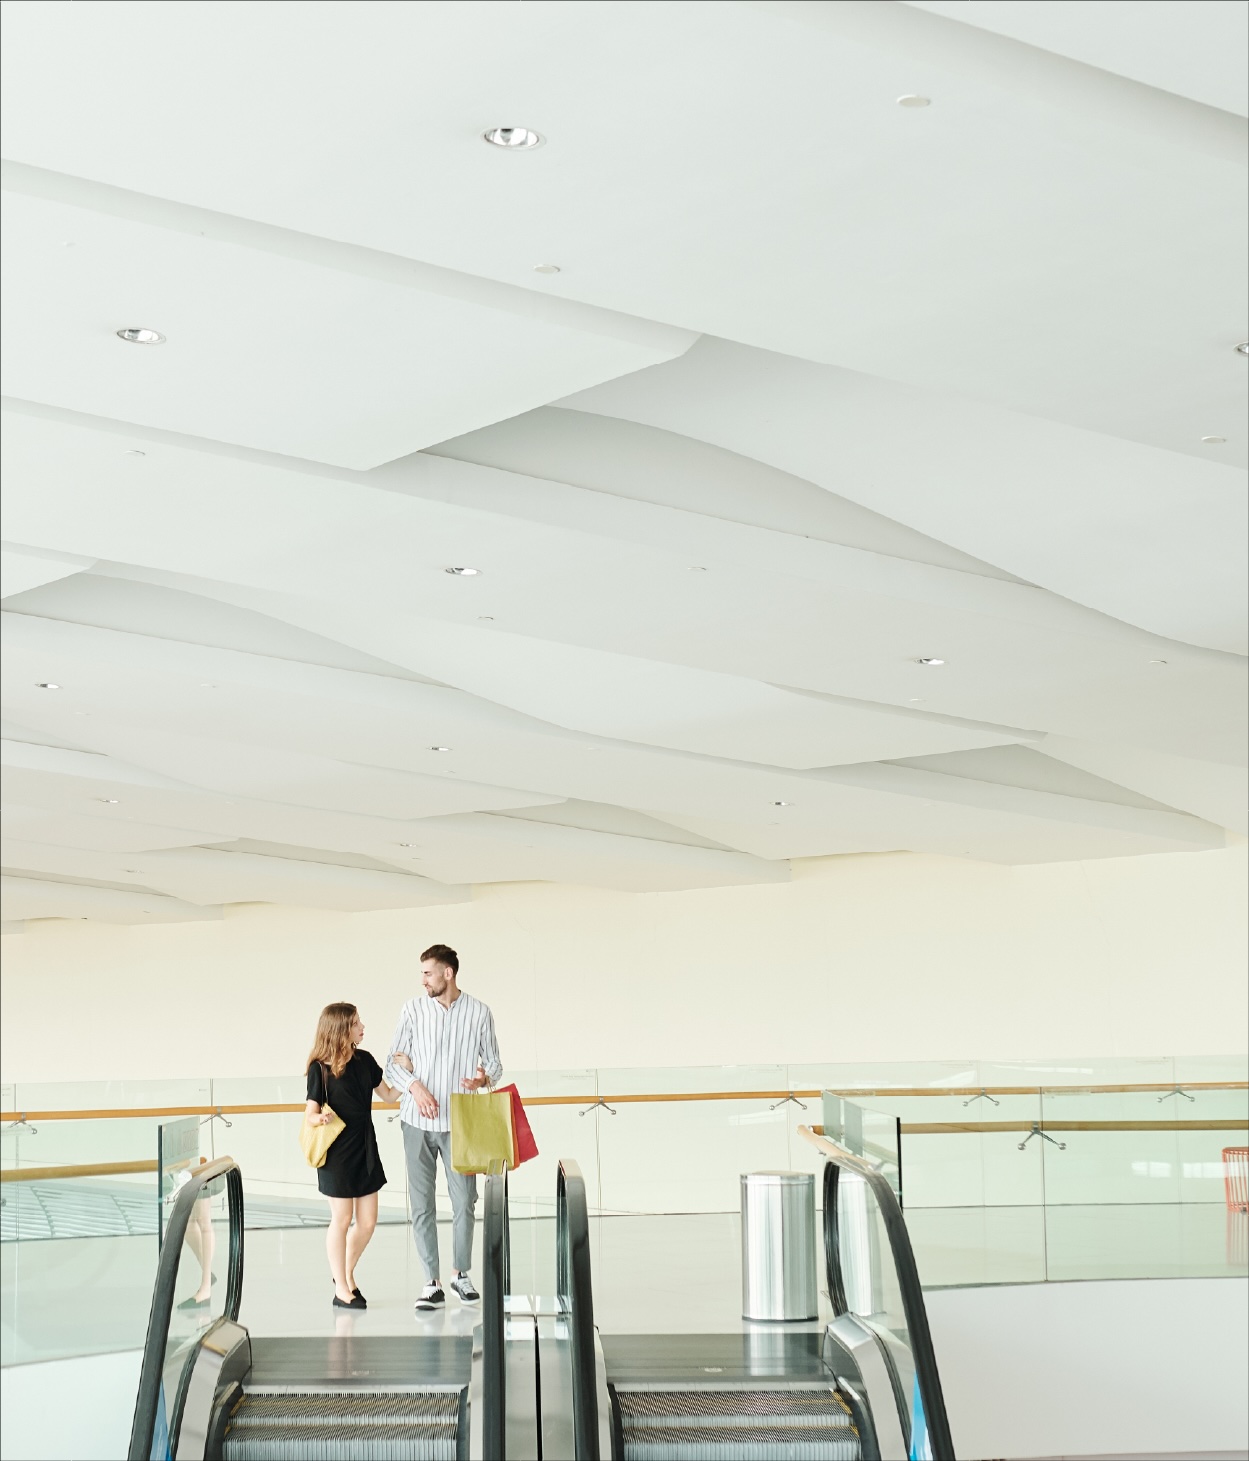 A shopping couple prepare to step onto a mall's escalator.